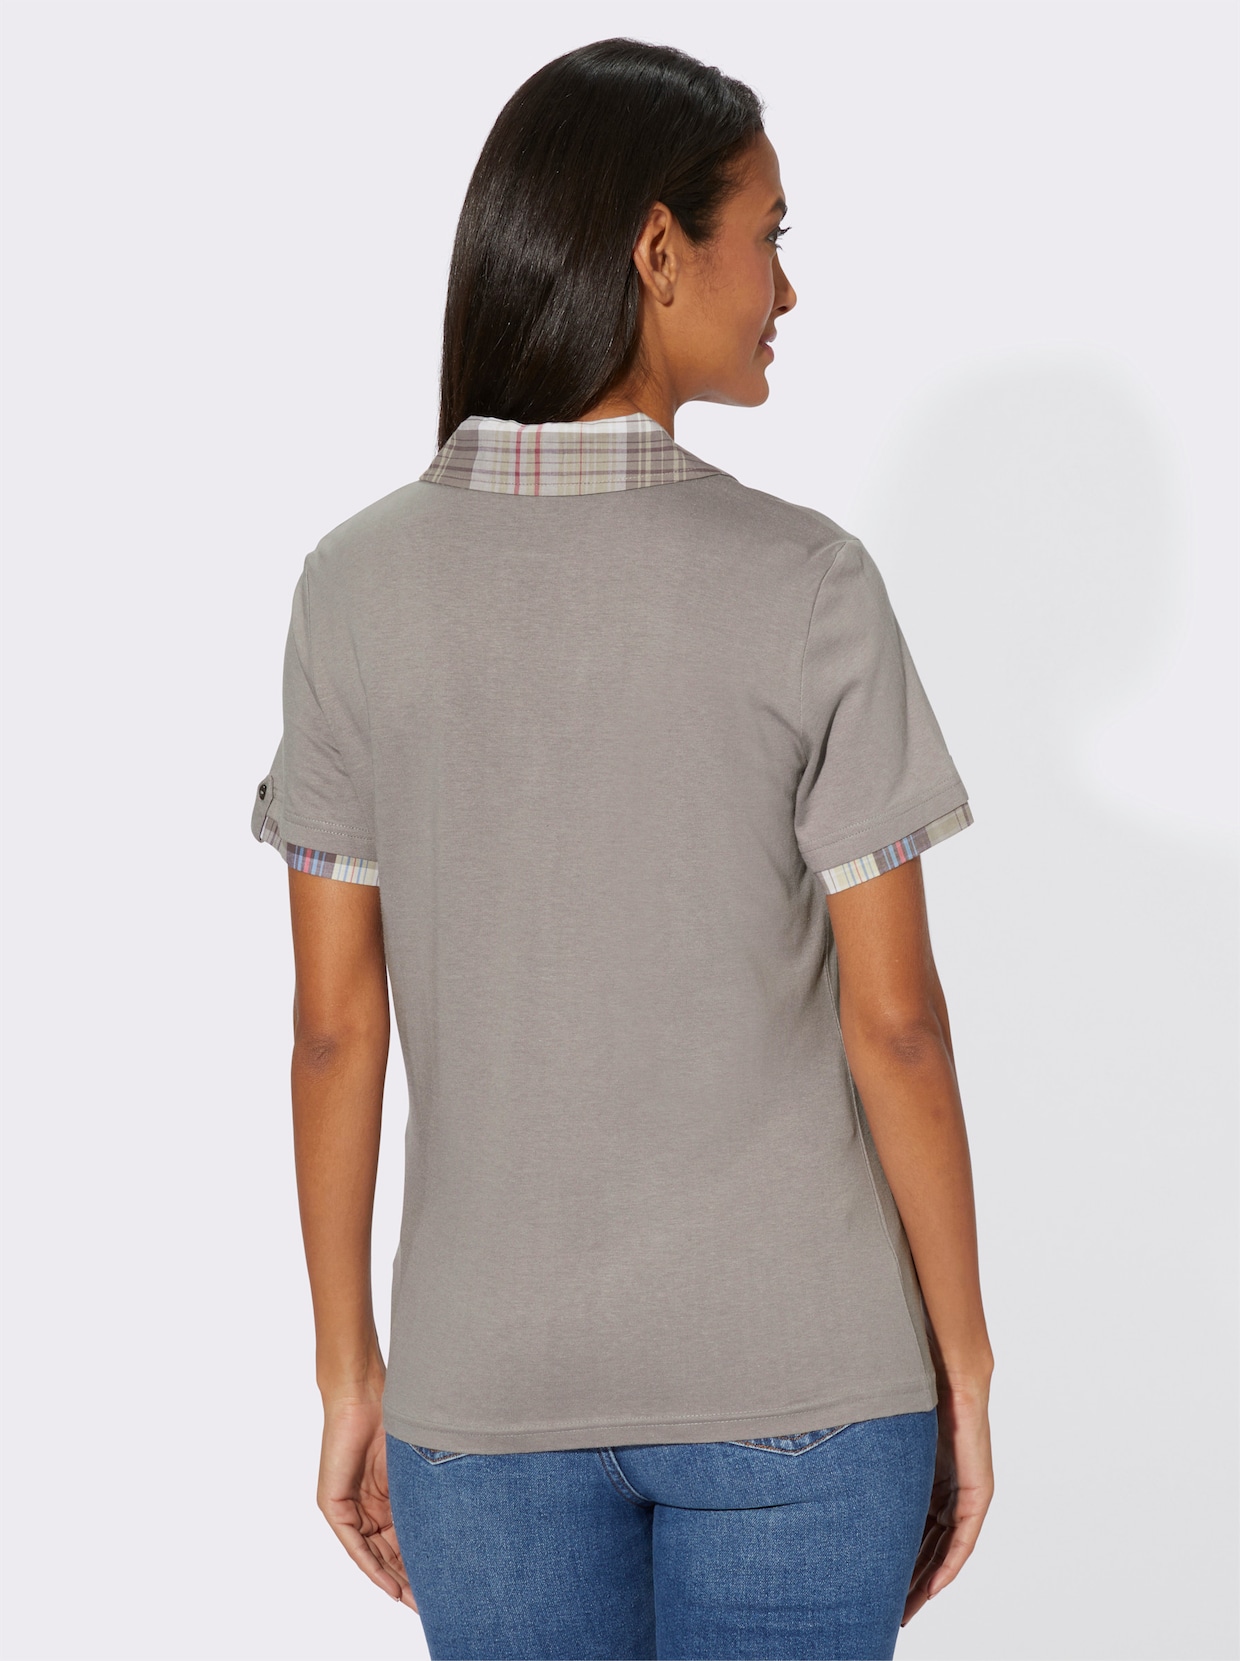 2-in-1-Shirt - grau-meliert